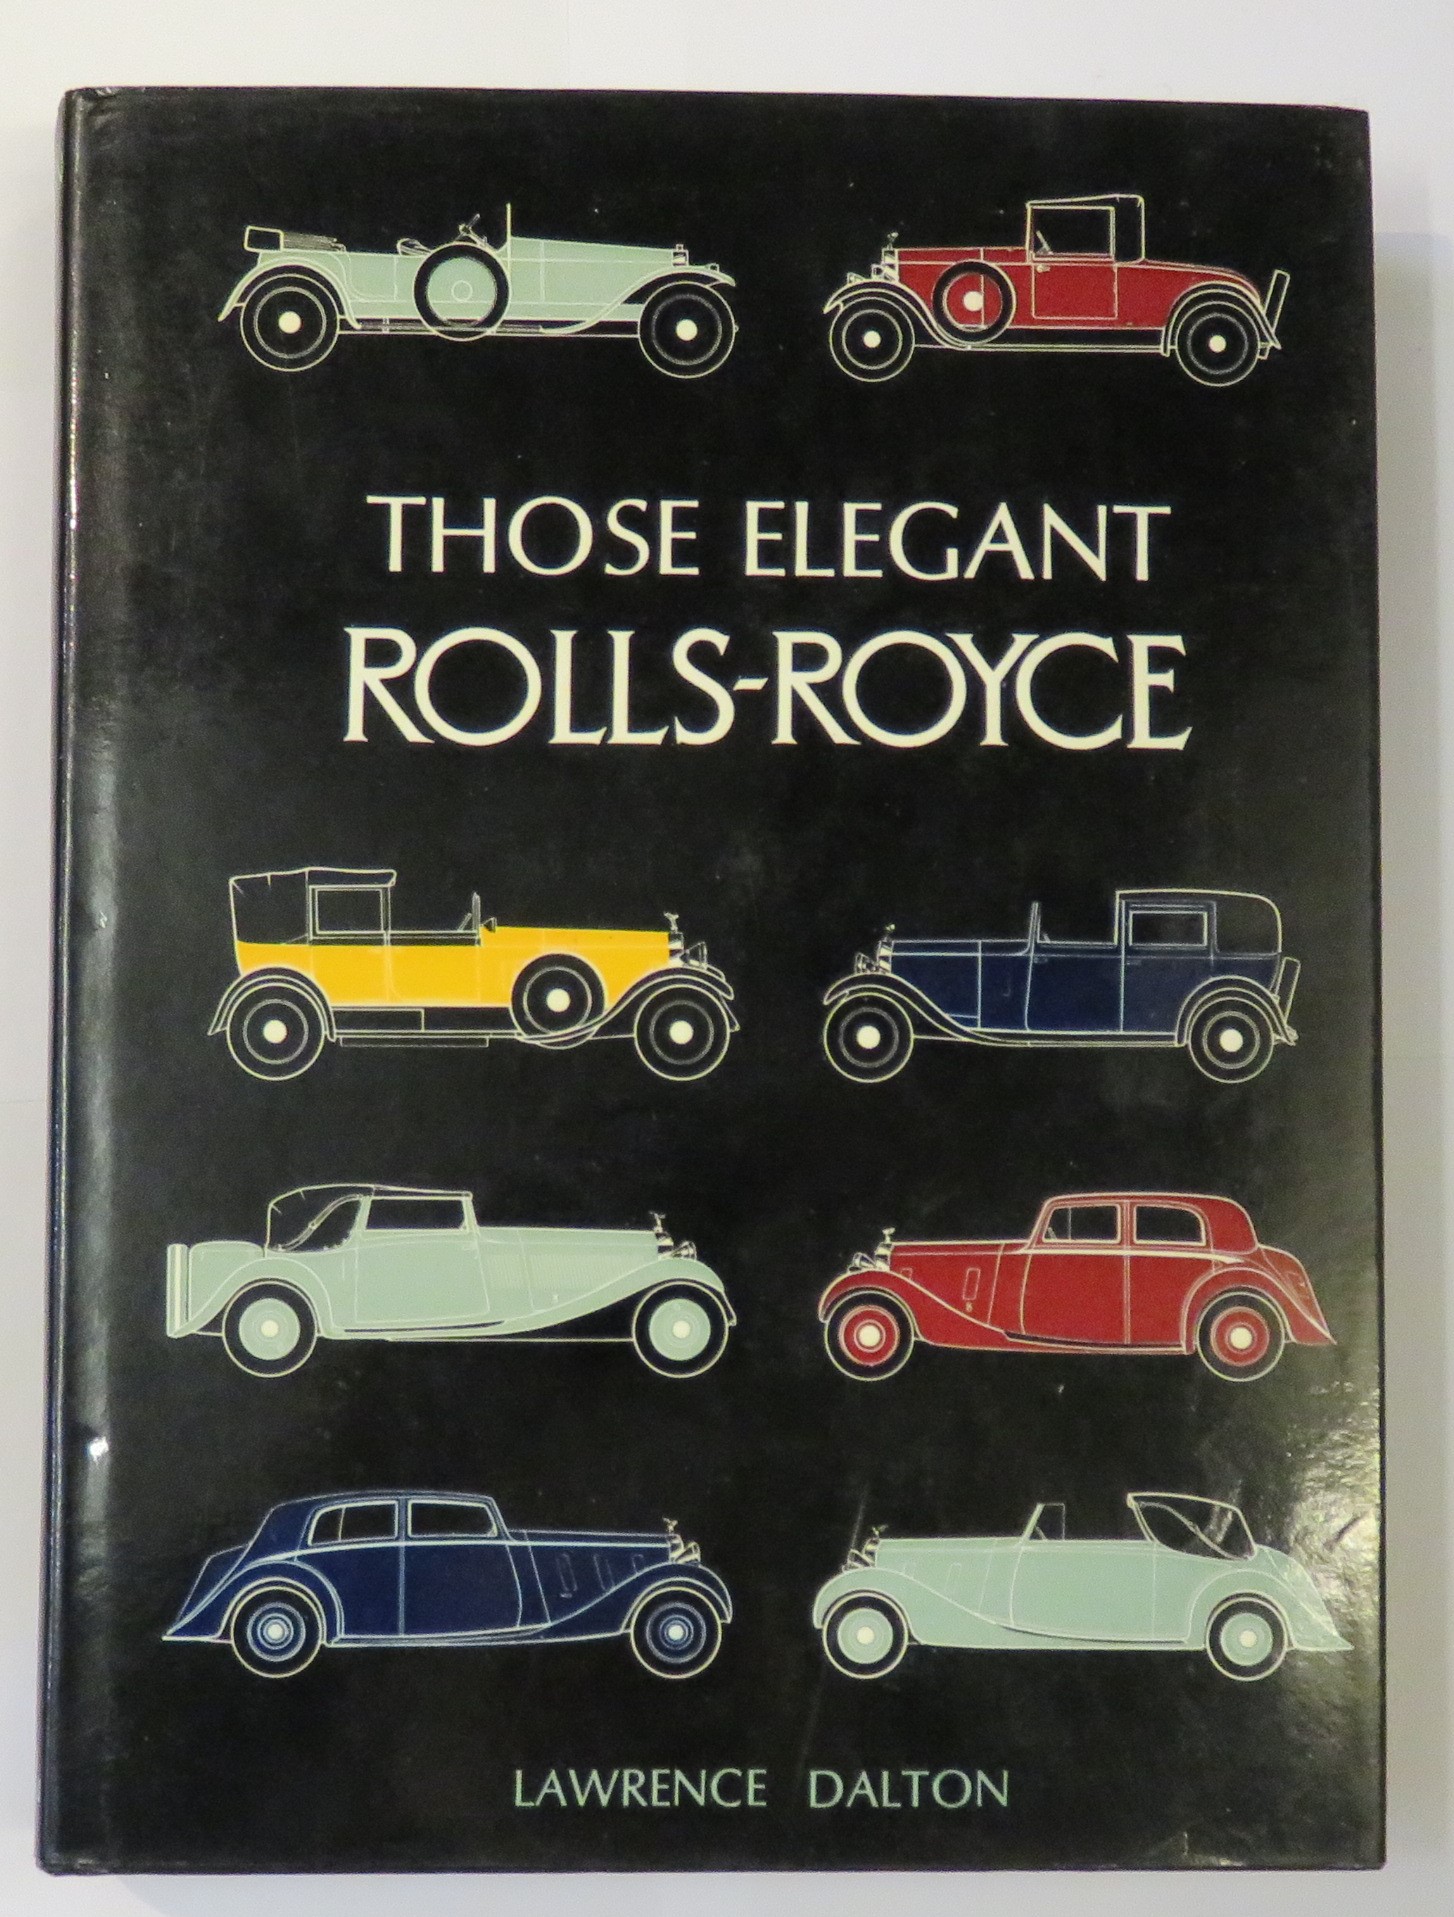 Those Elegant Rolls-Royce